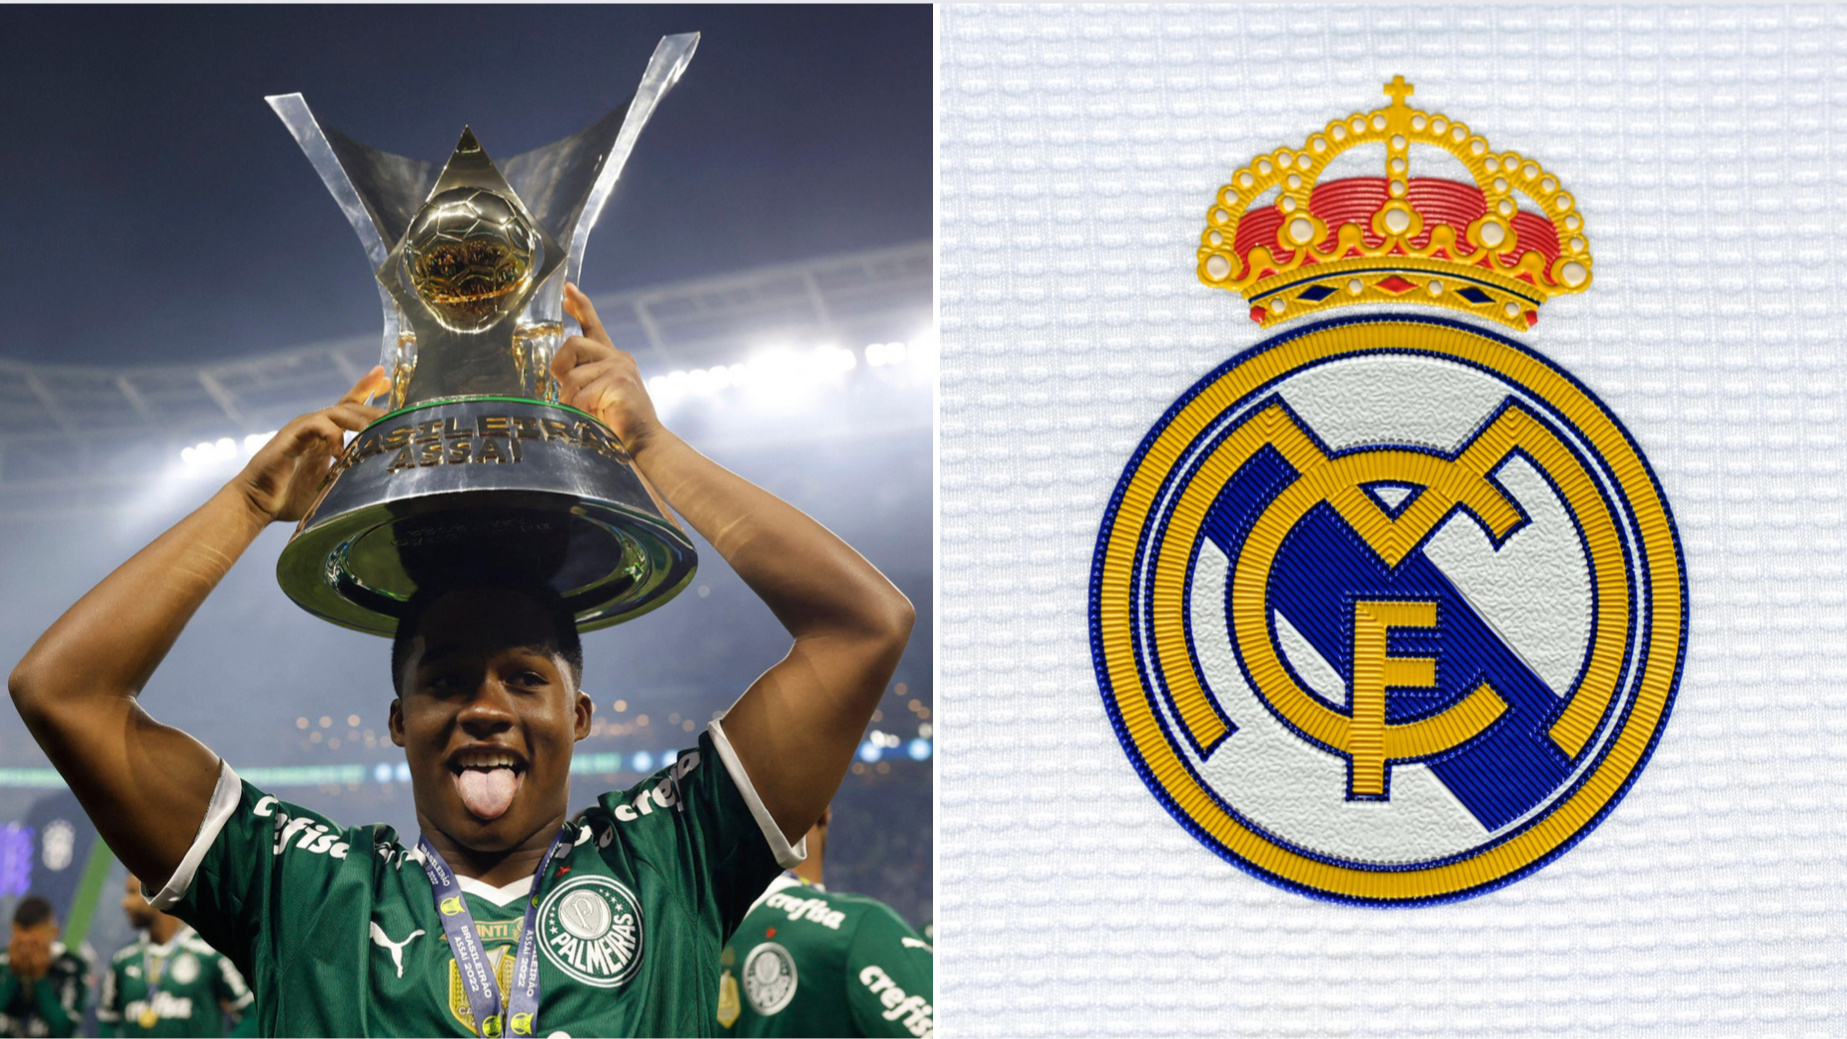 Endrick: 17-year-old Real Madrid-bound sensation earns milestone Brazil  national team selection